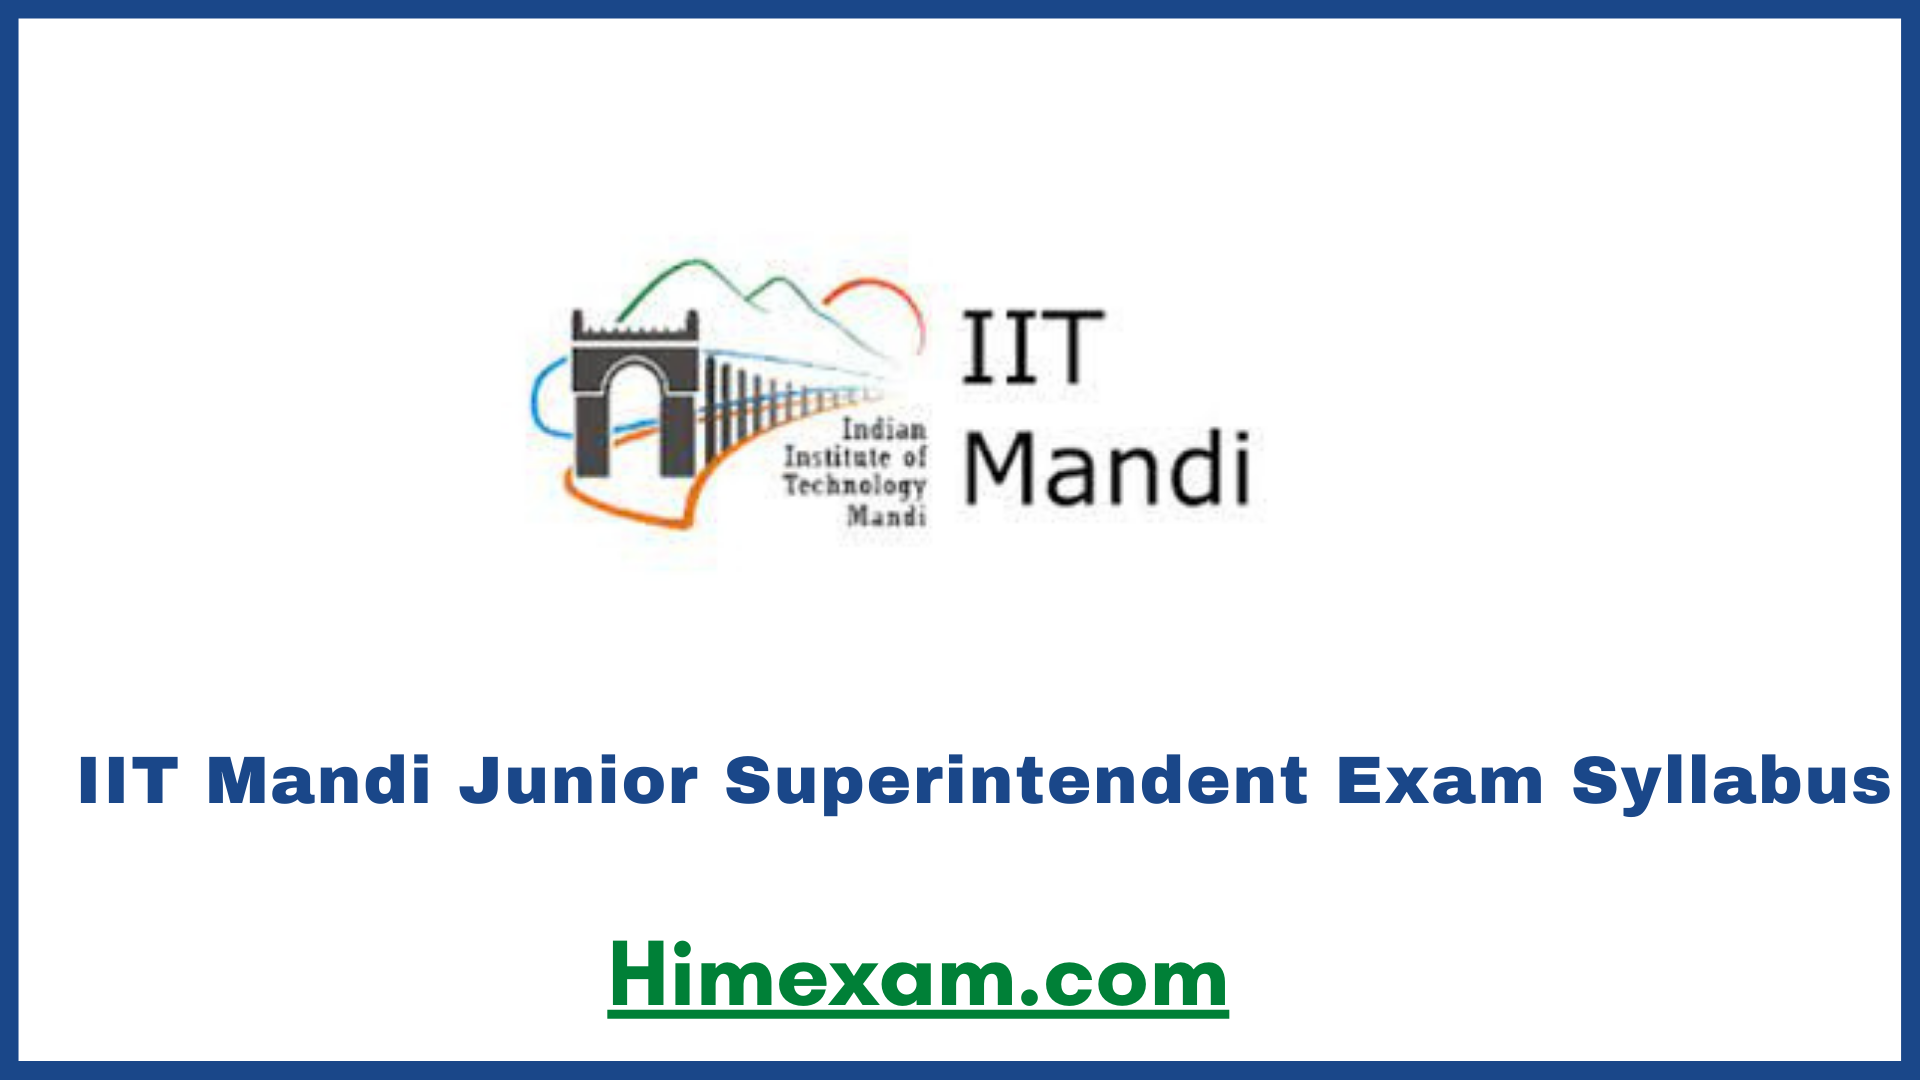 IIT Mandi Junior Superintendent Exam Syllabus